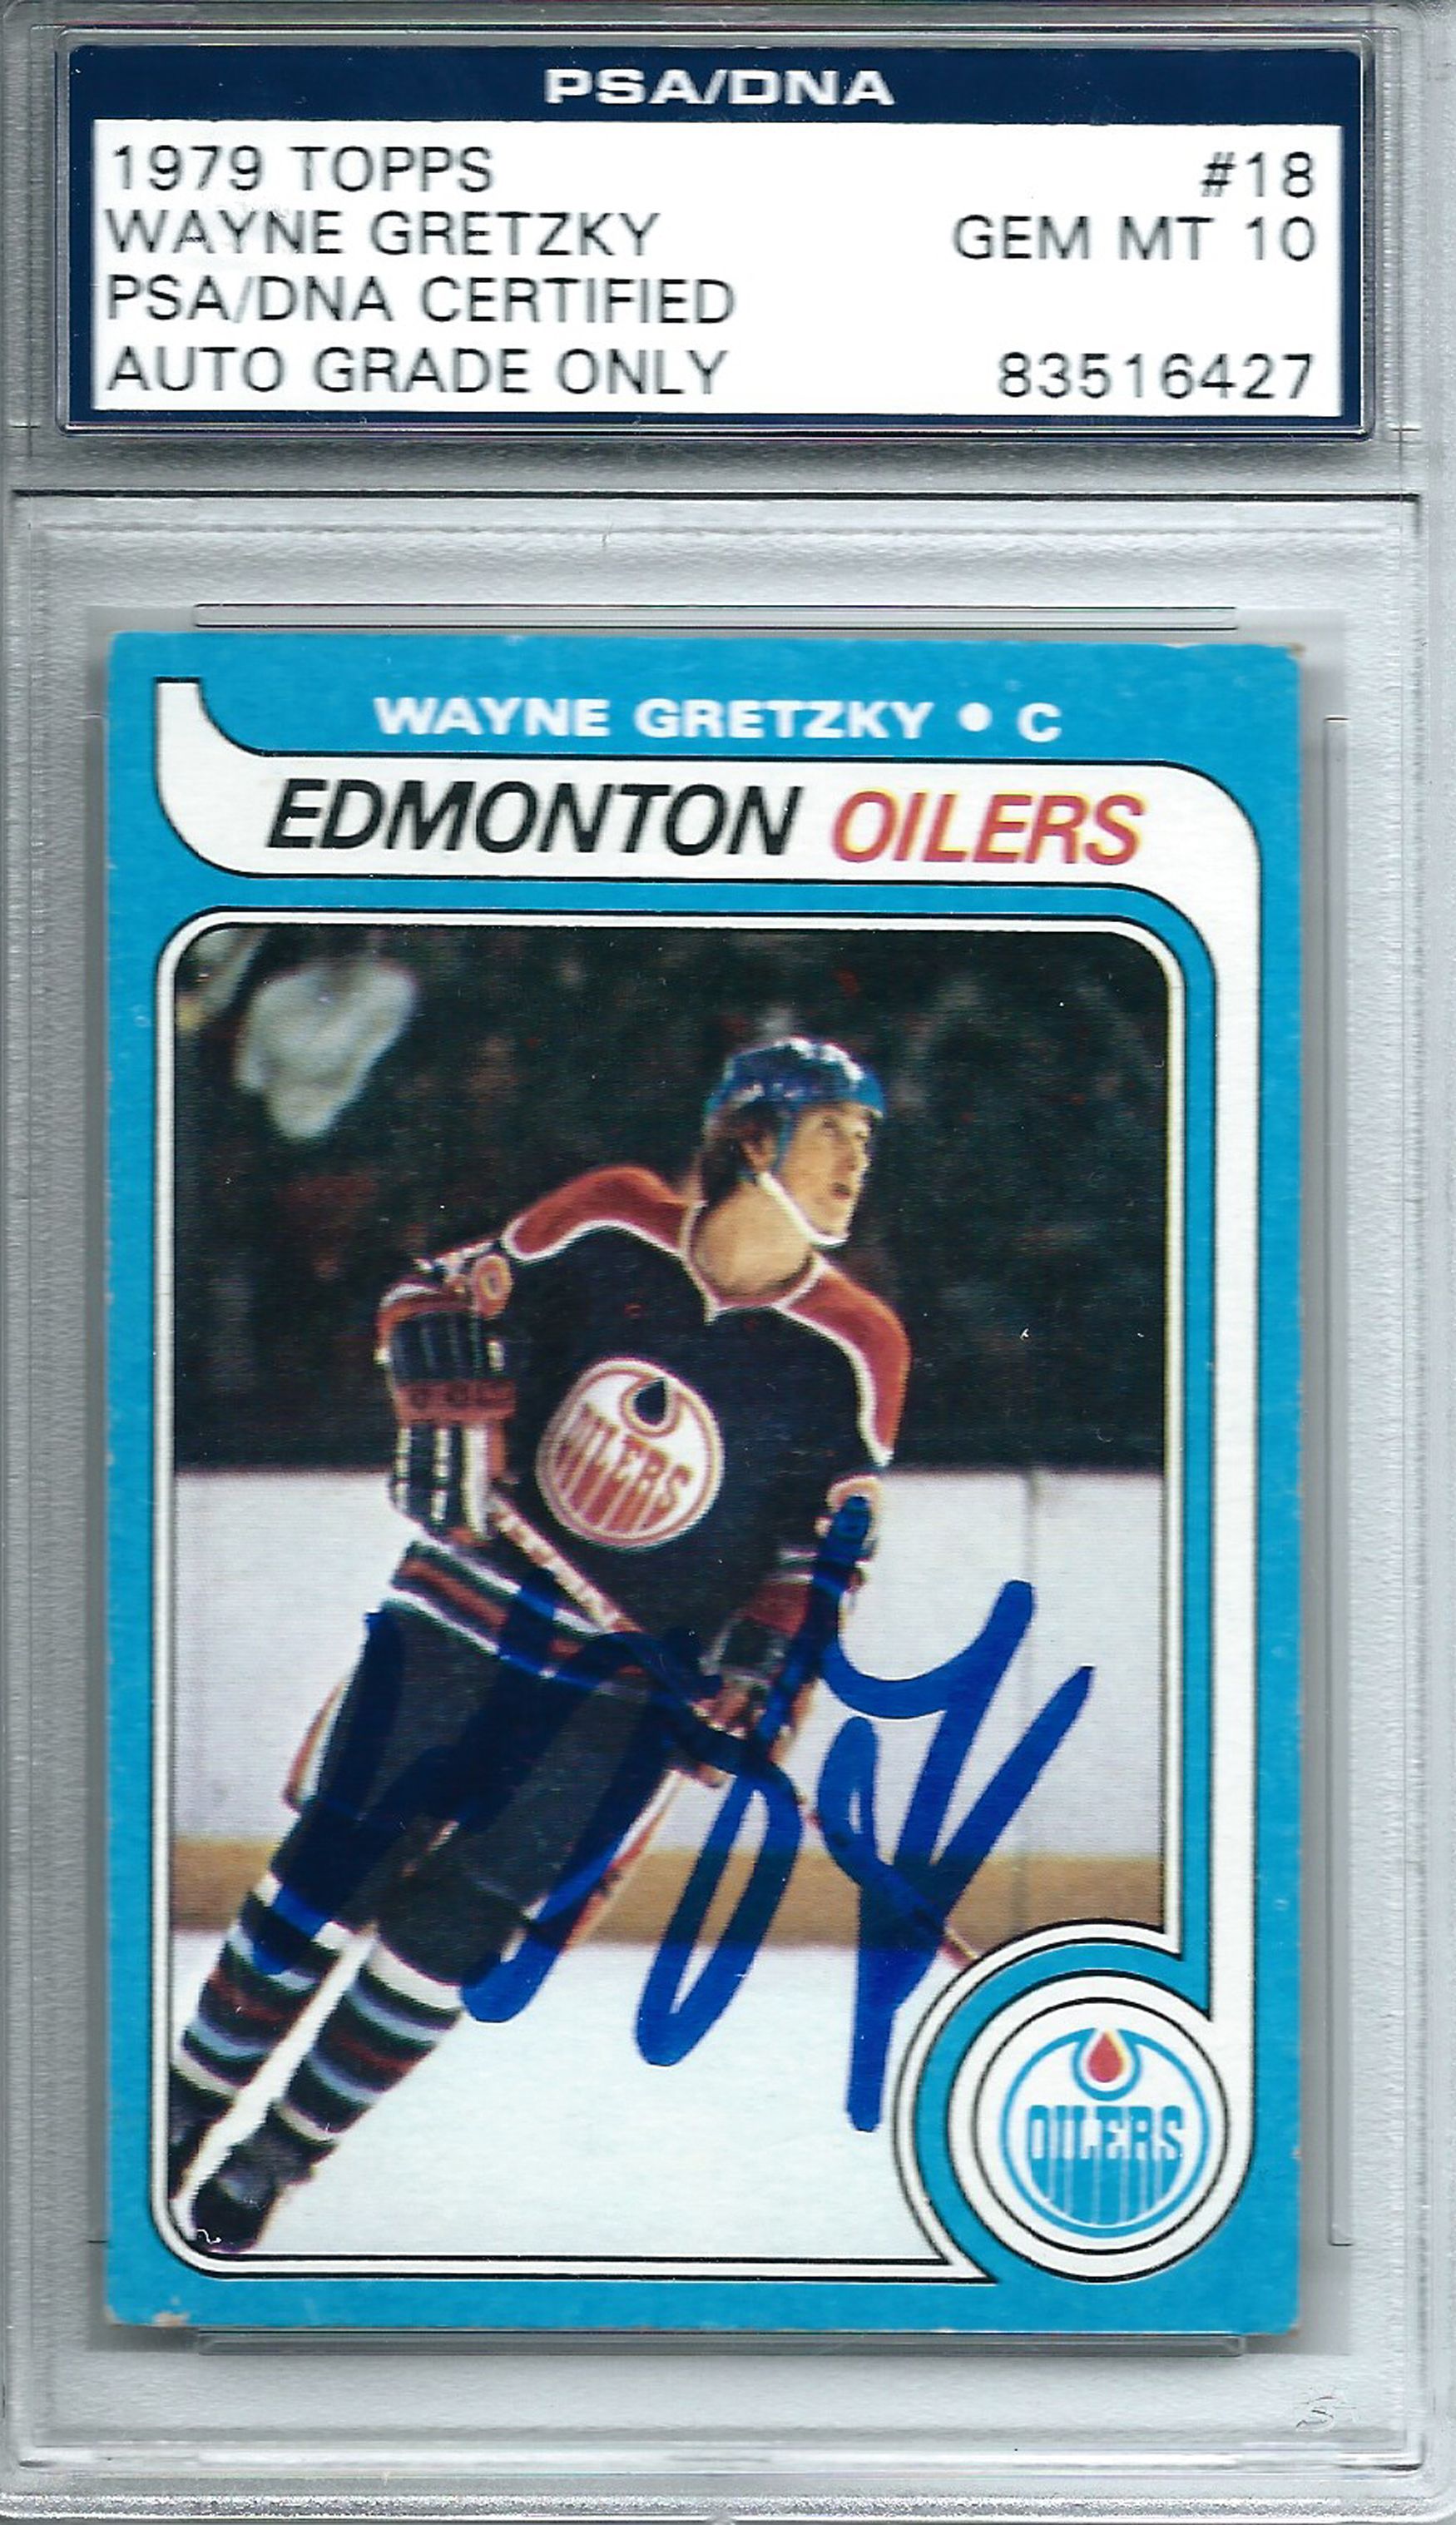 1981-82 O-Pee-Chee Wayne Gretzky Autograph PSA/DNA Certified